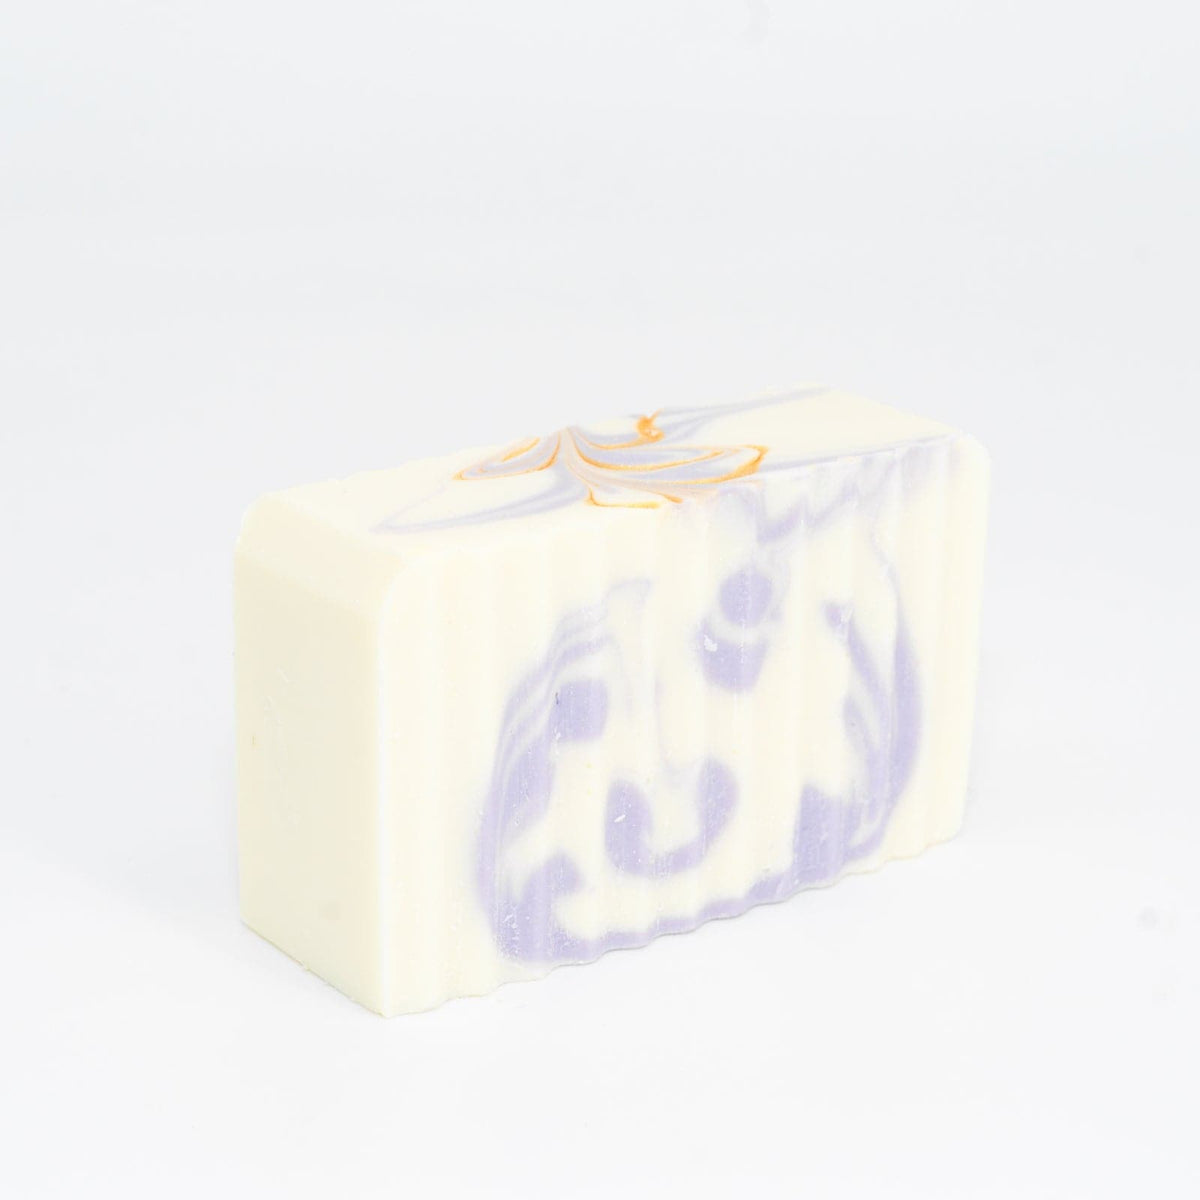 Lavender Shea Butter Soap